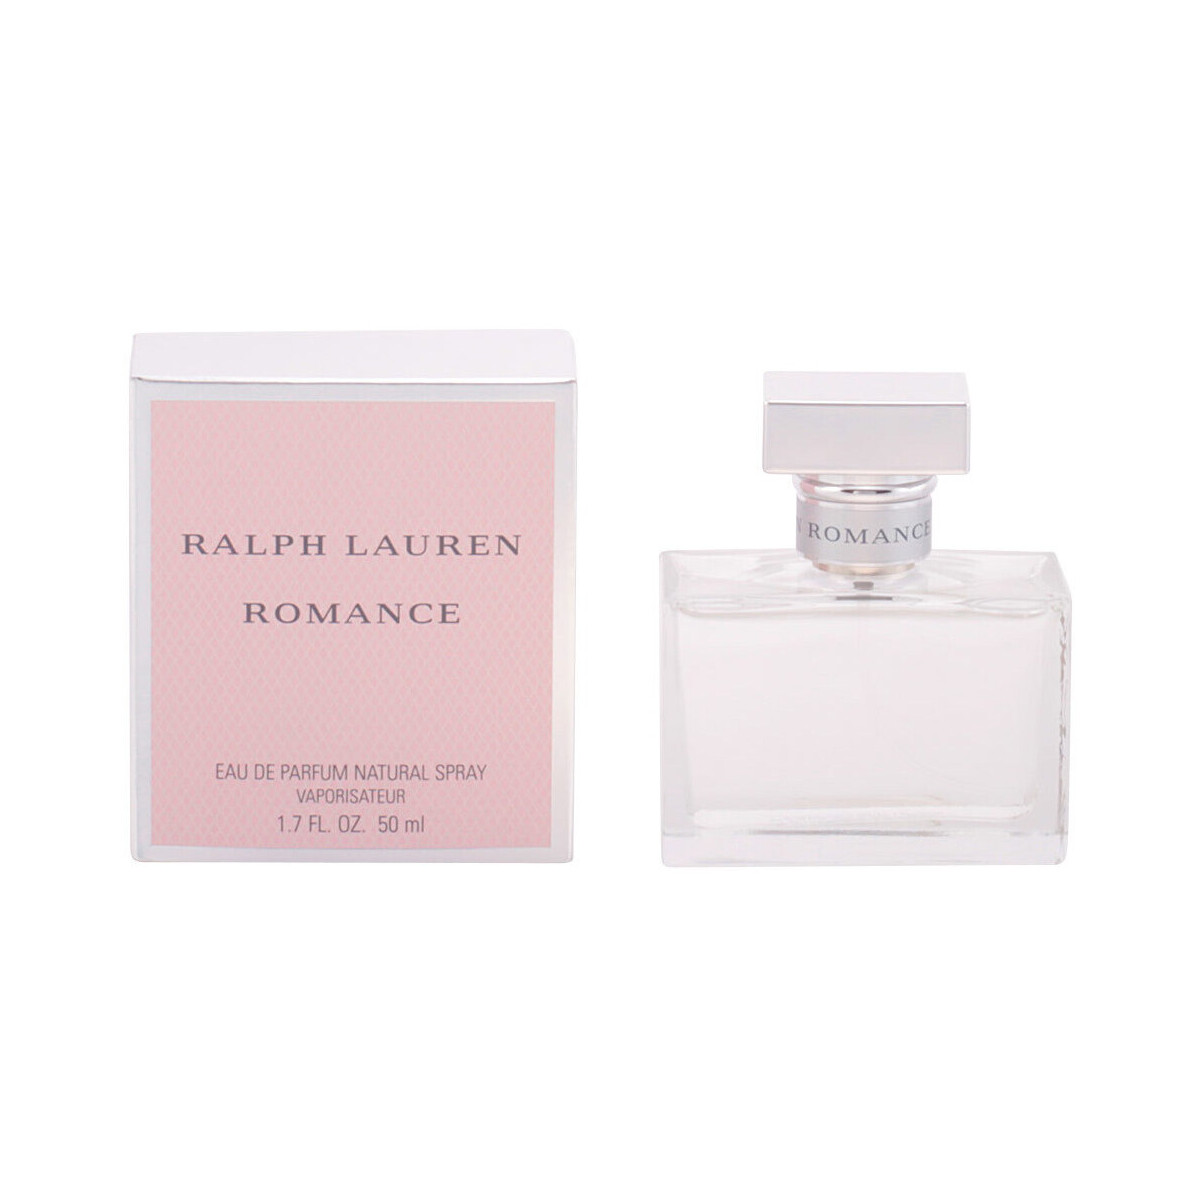 Belleza Mujer Perfume Ralph Lauren Romance Edp Vaporizador 